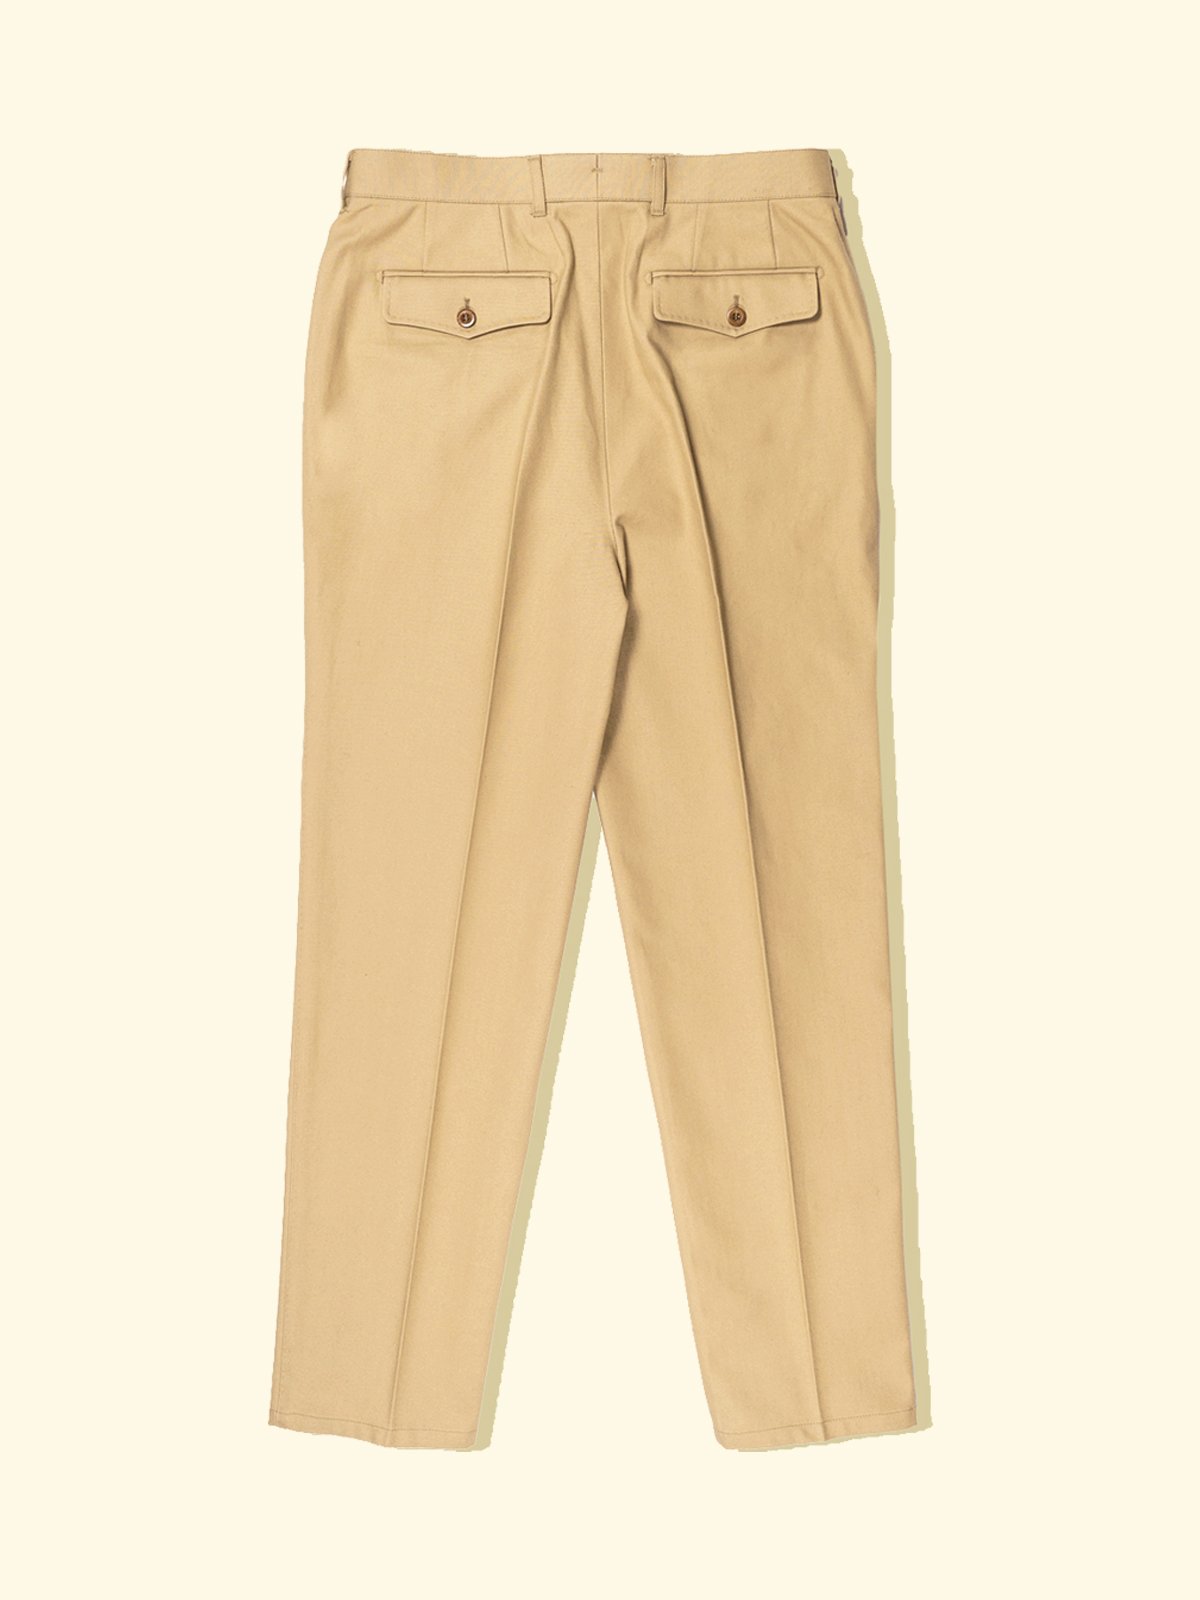 Cotton-drill trousers, optic white | Max&Co.